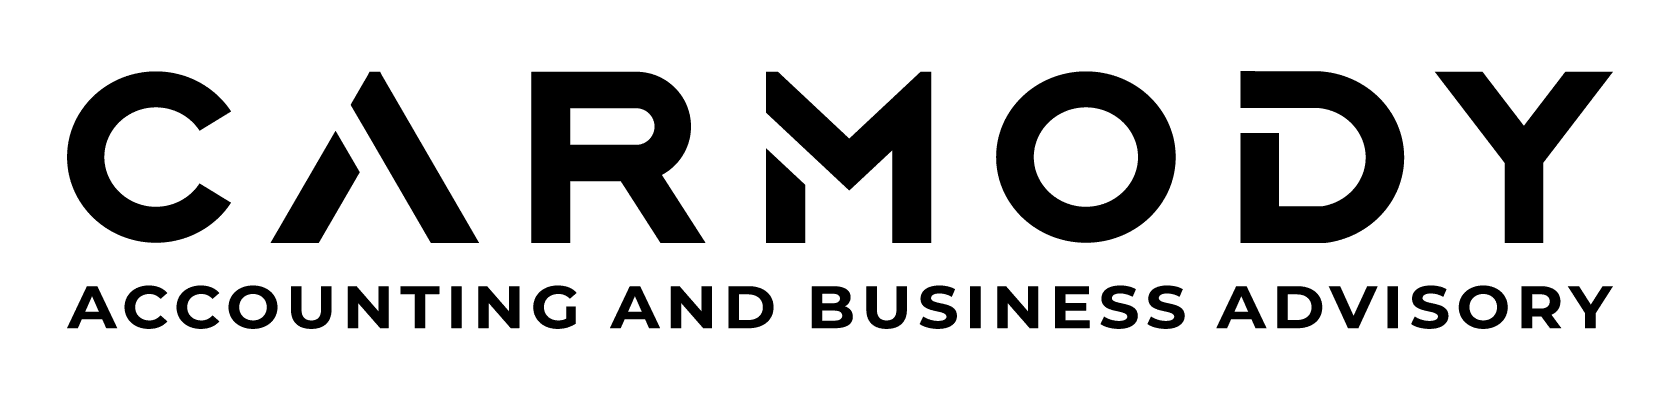 Carmody Accounting and Business Advisory